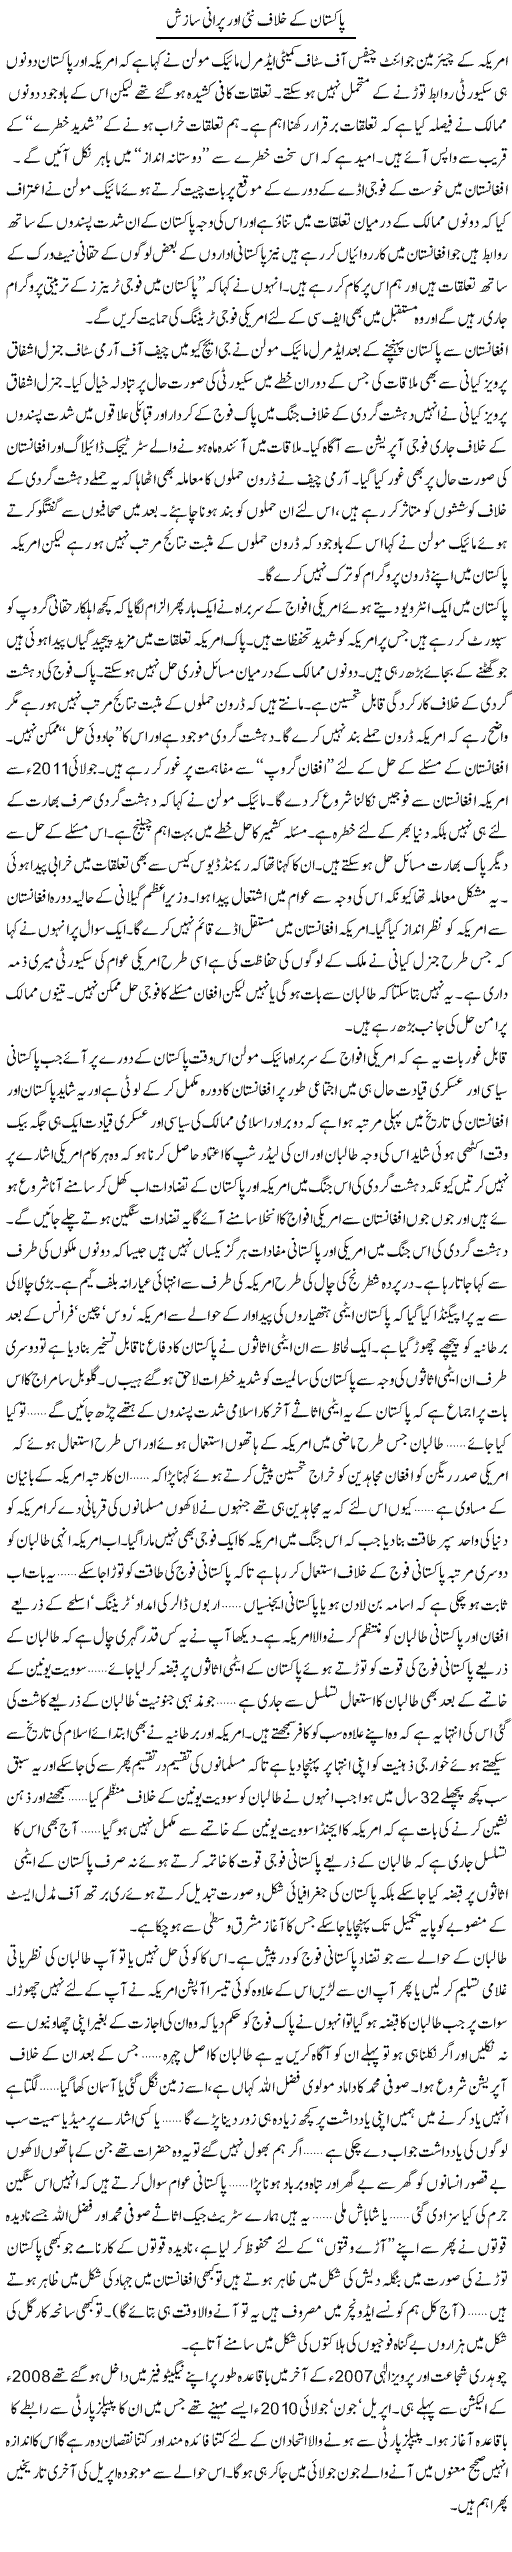 Conspiracy Against Pakistan Express Column Zamrad Naqvi 25 April 2011